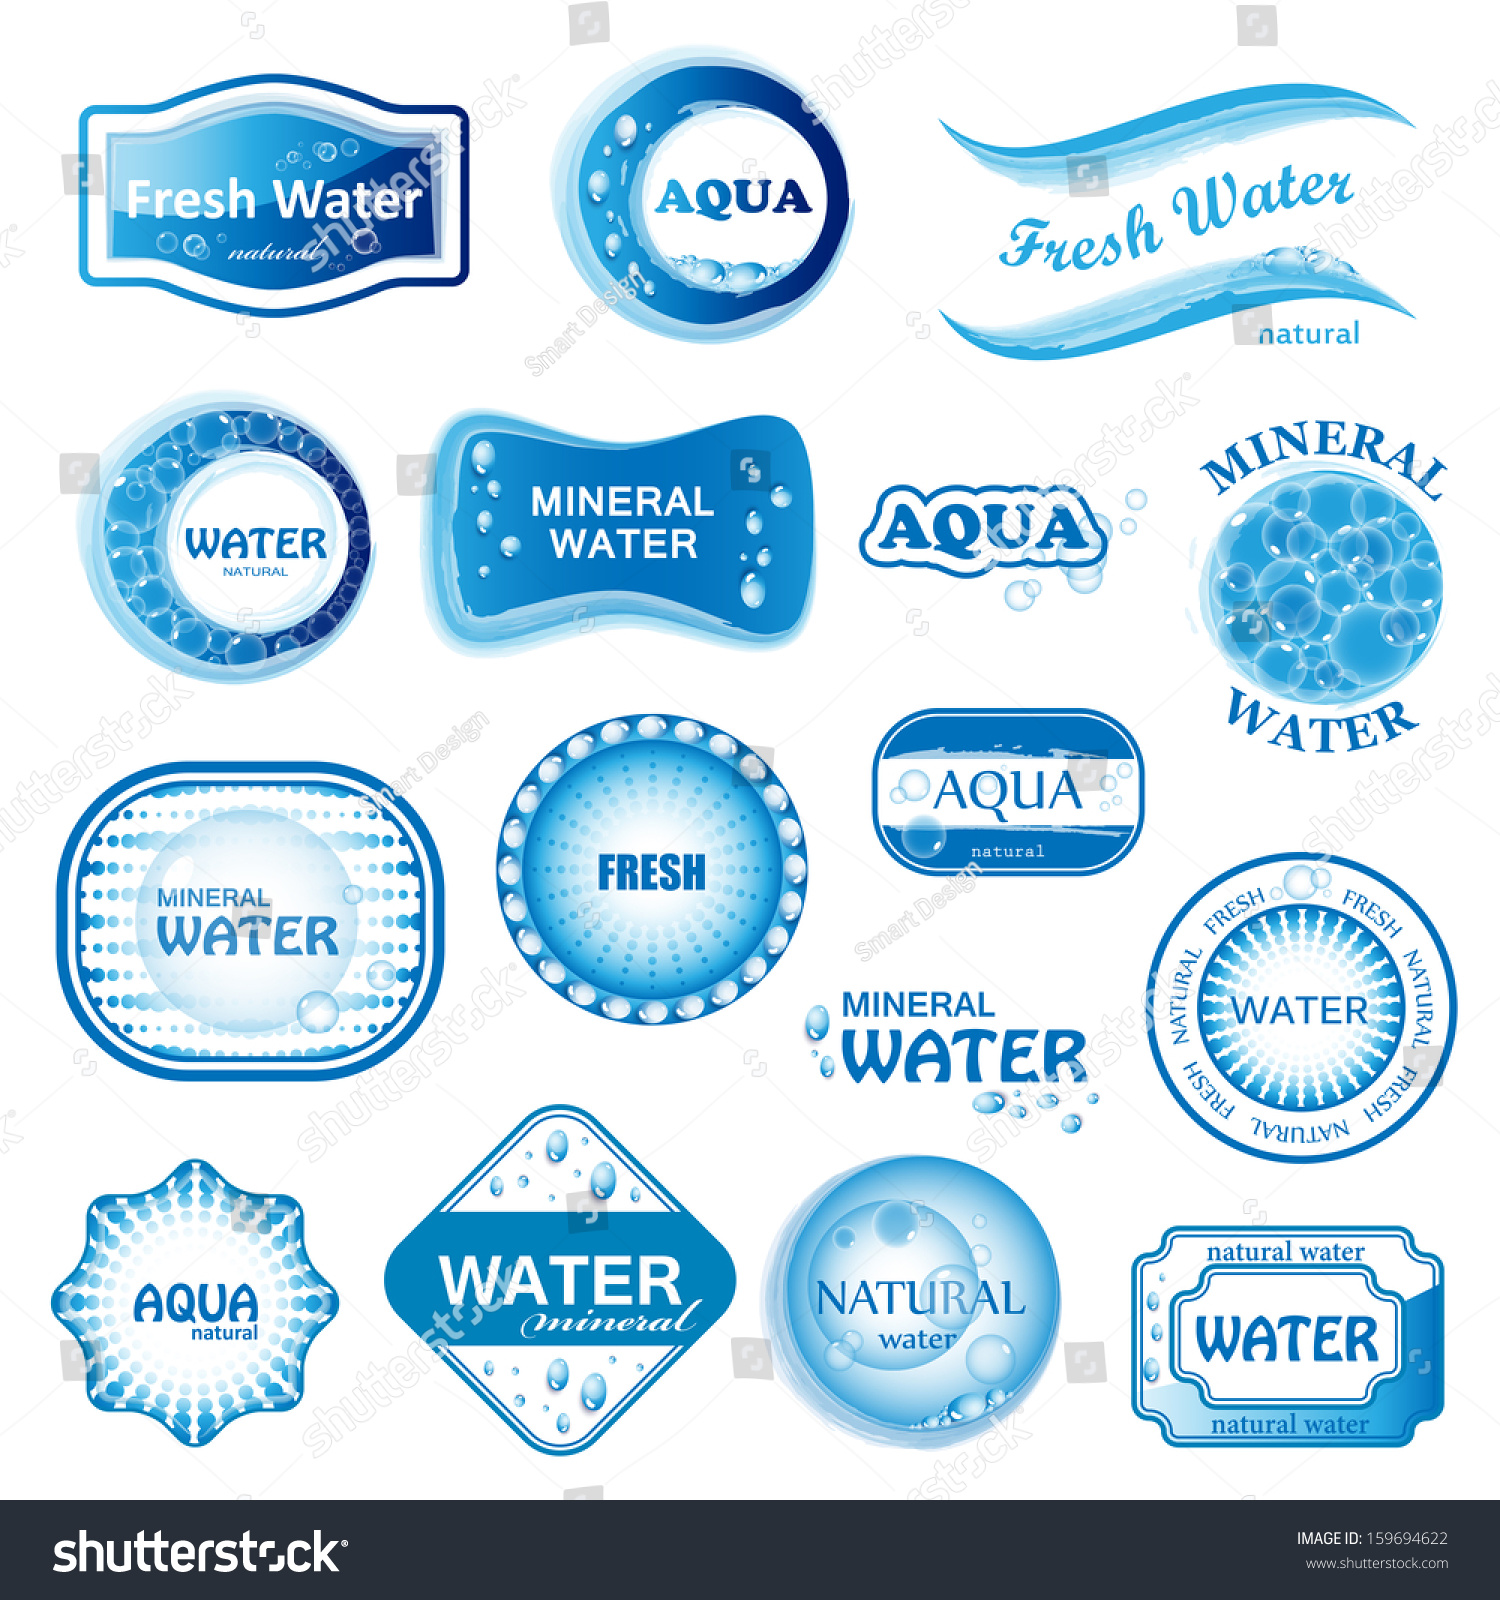 Water Label Vector Free Download